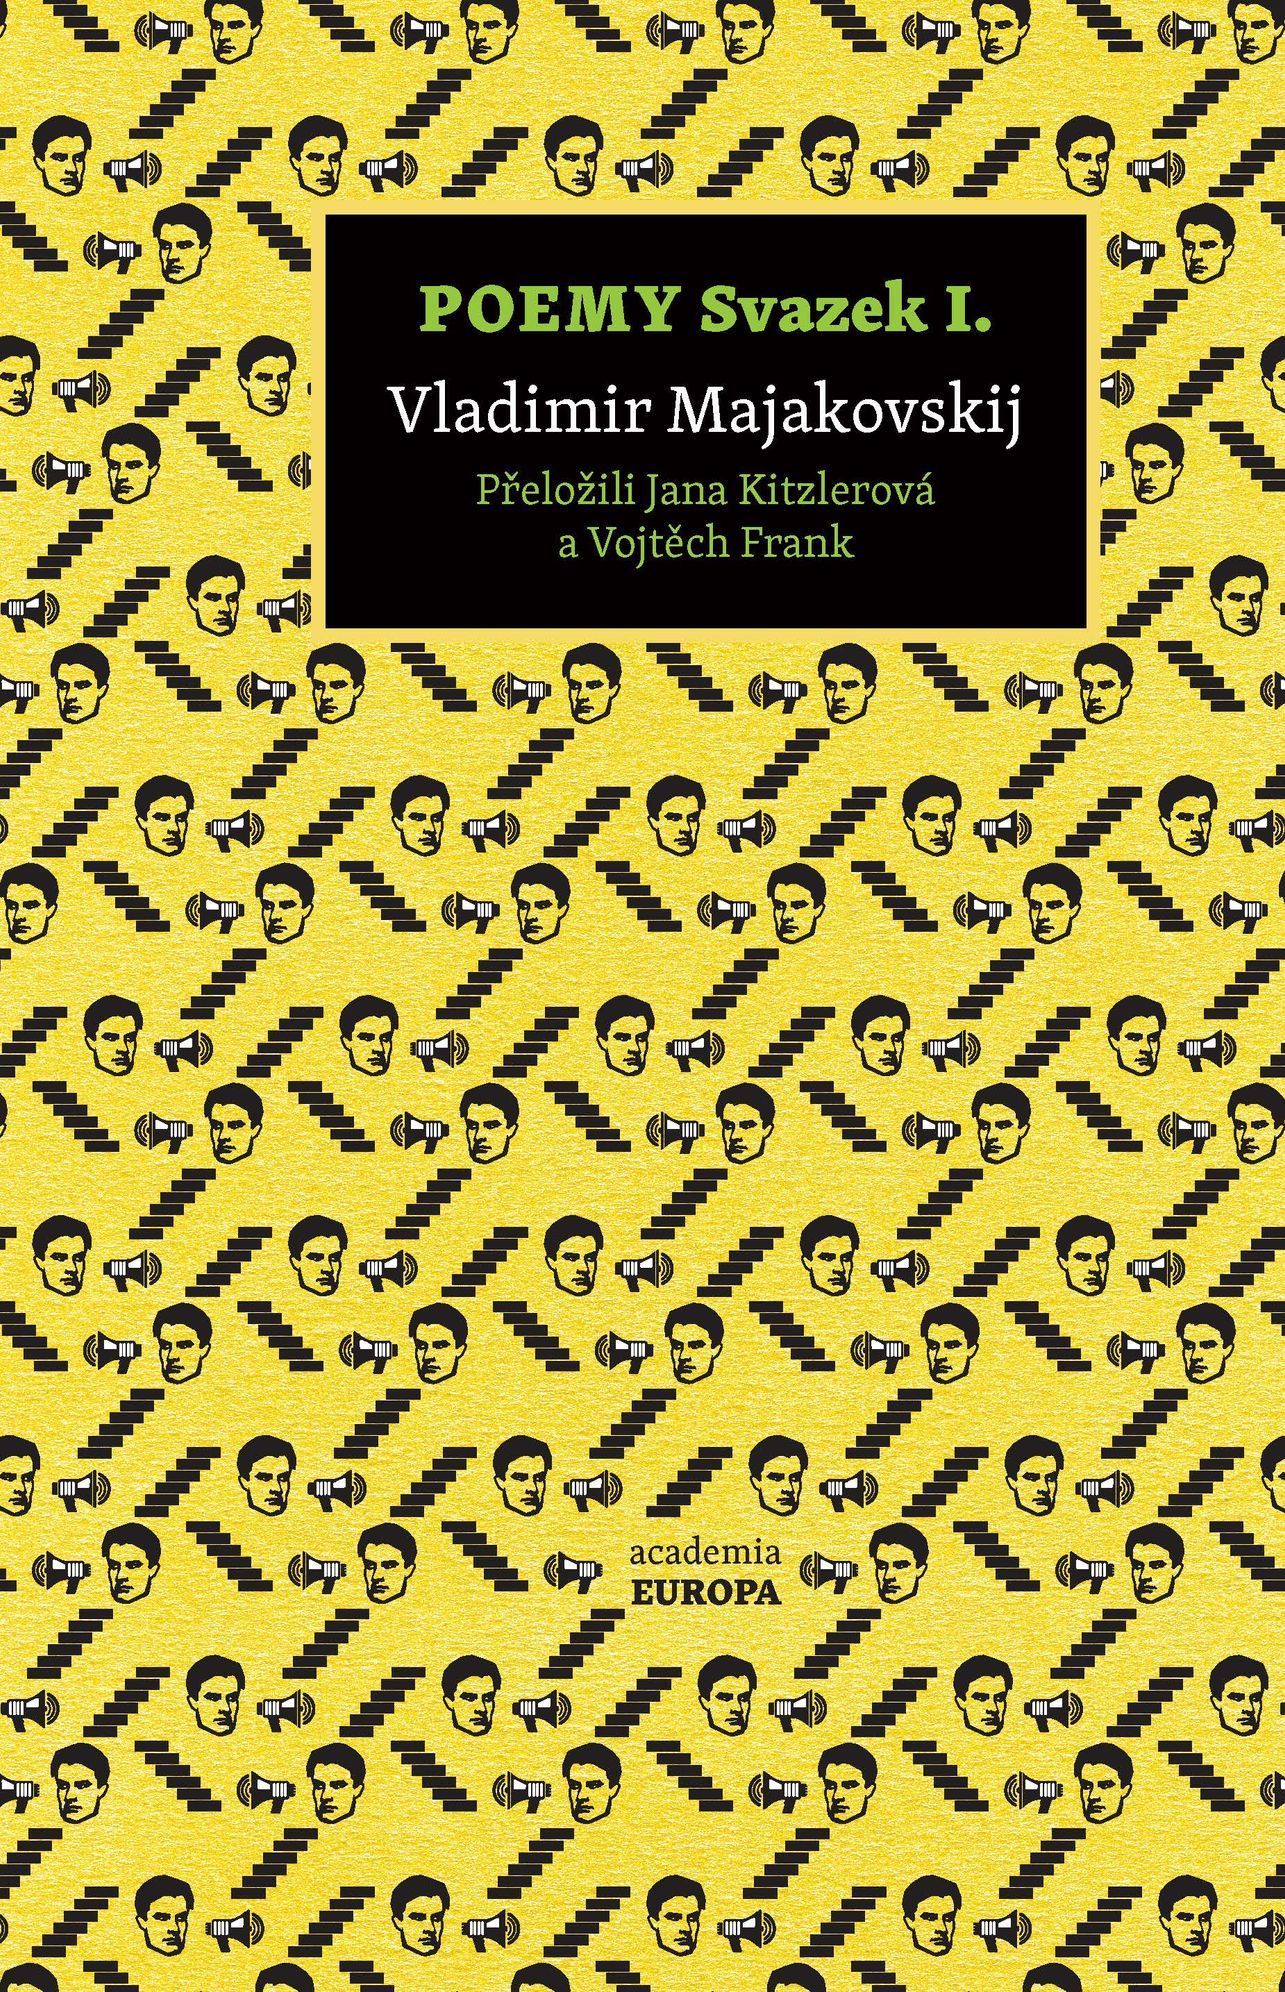 Vladimir Majakovskij: Poemy – Svazek 1